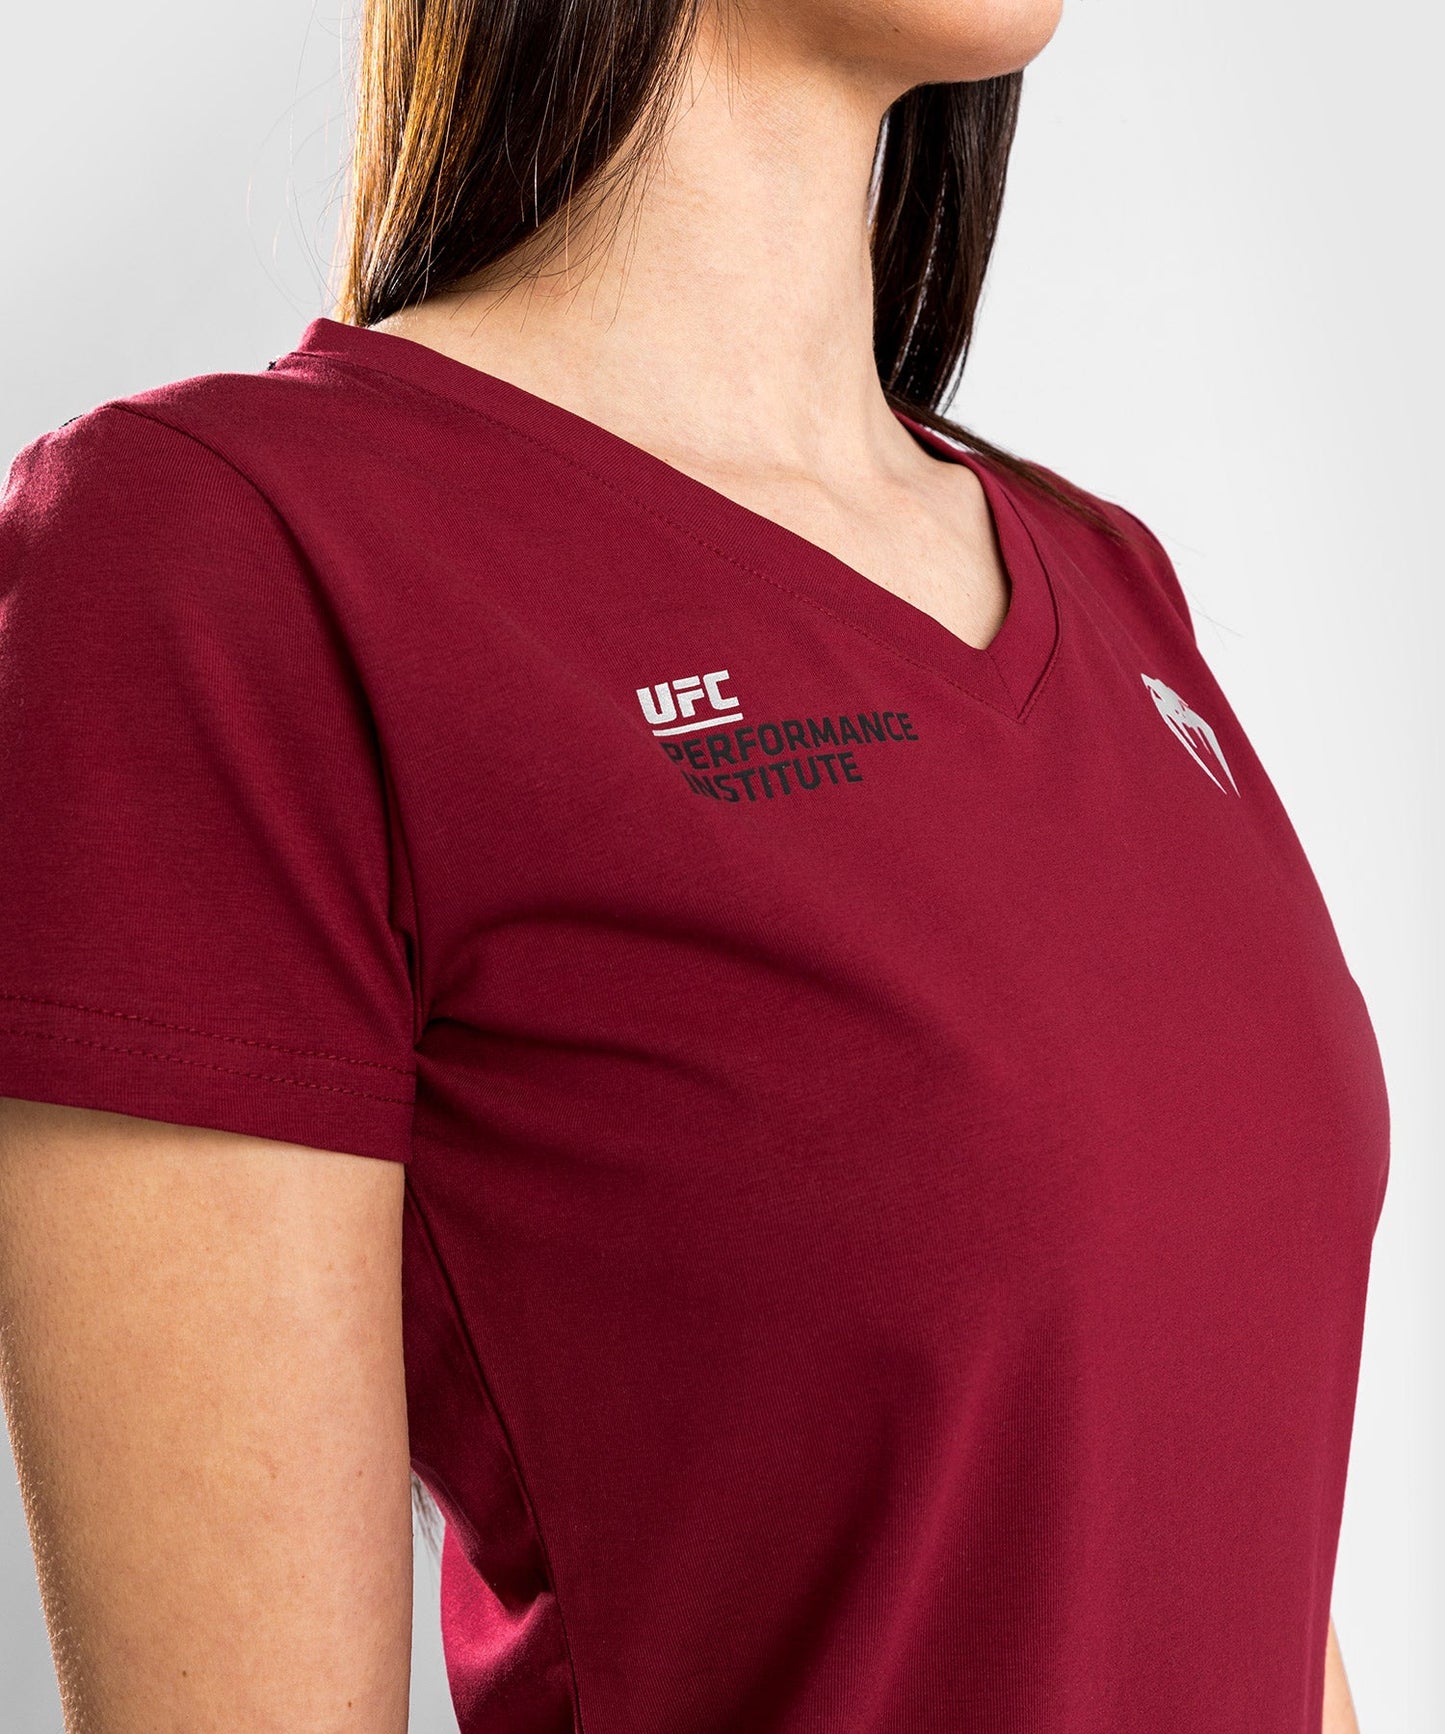 UFC Venum Performance Institute T-Shirt - For Women - Red